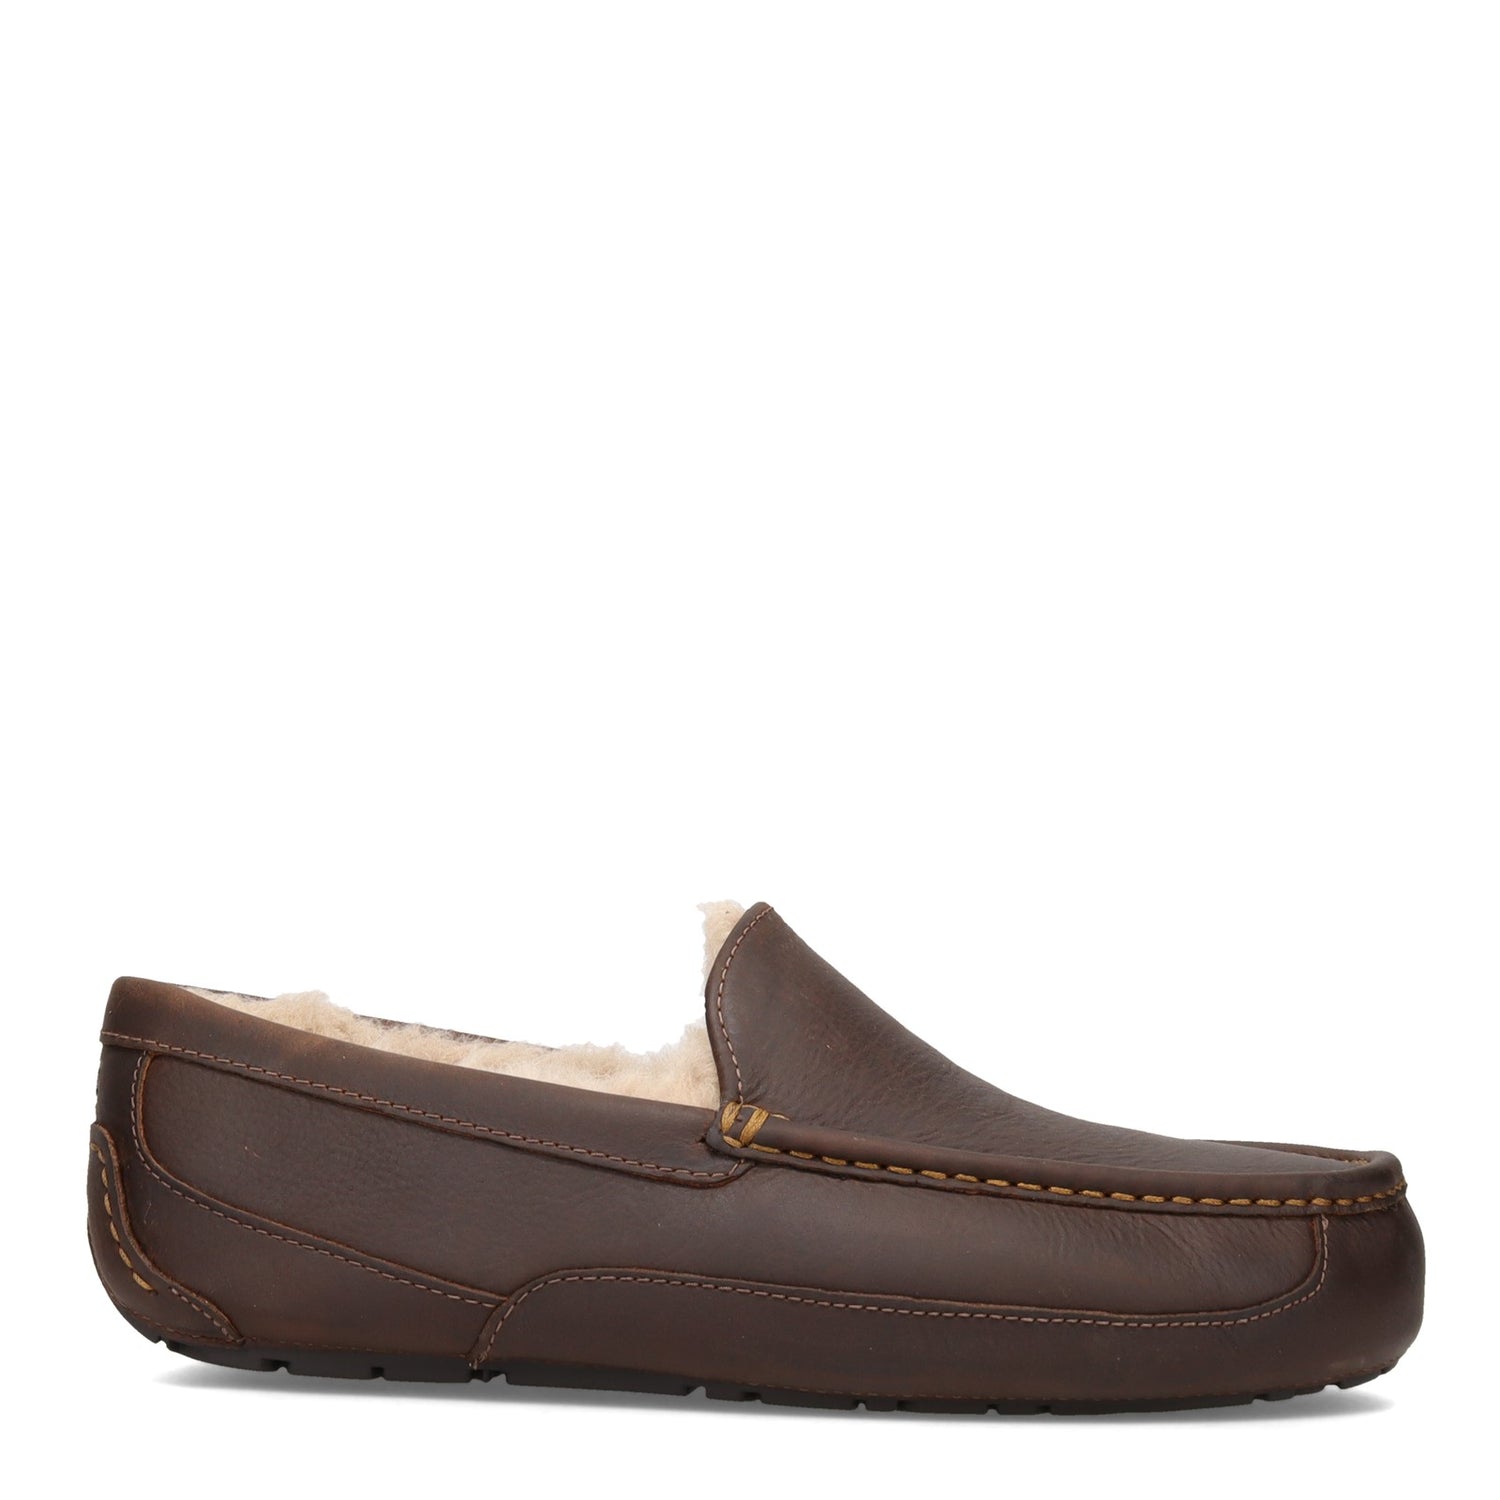 Peltz Shoes  Men's Ugg Ascot Slipper Tan Leather 1103889-TAN